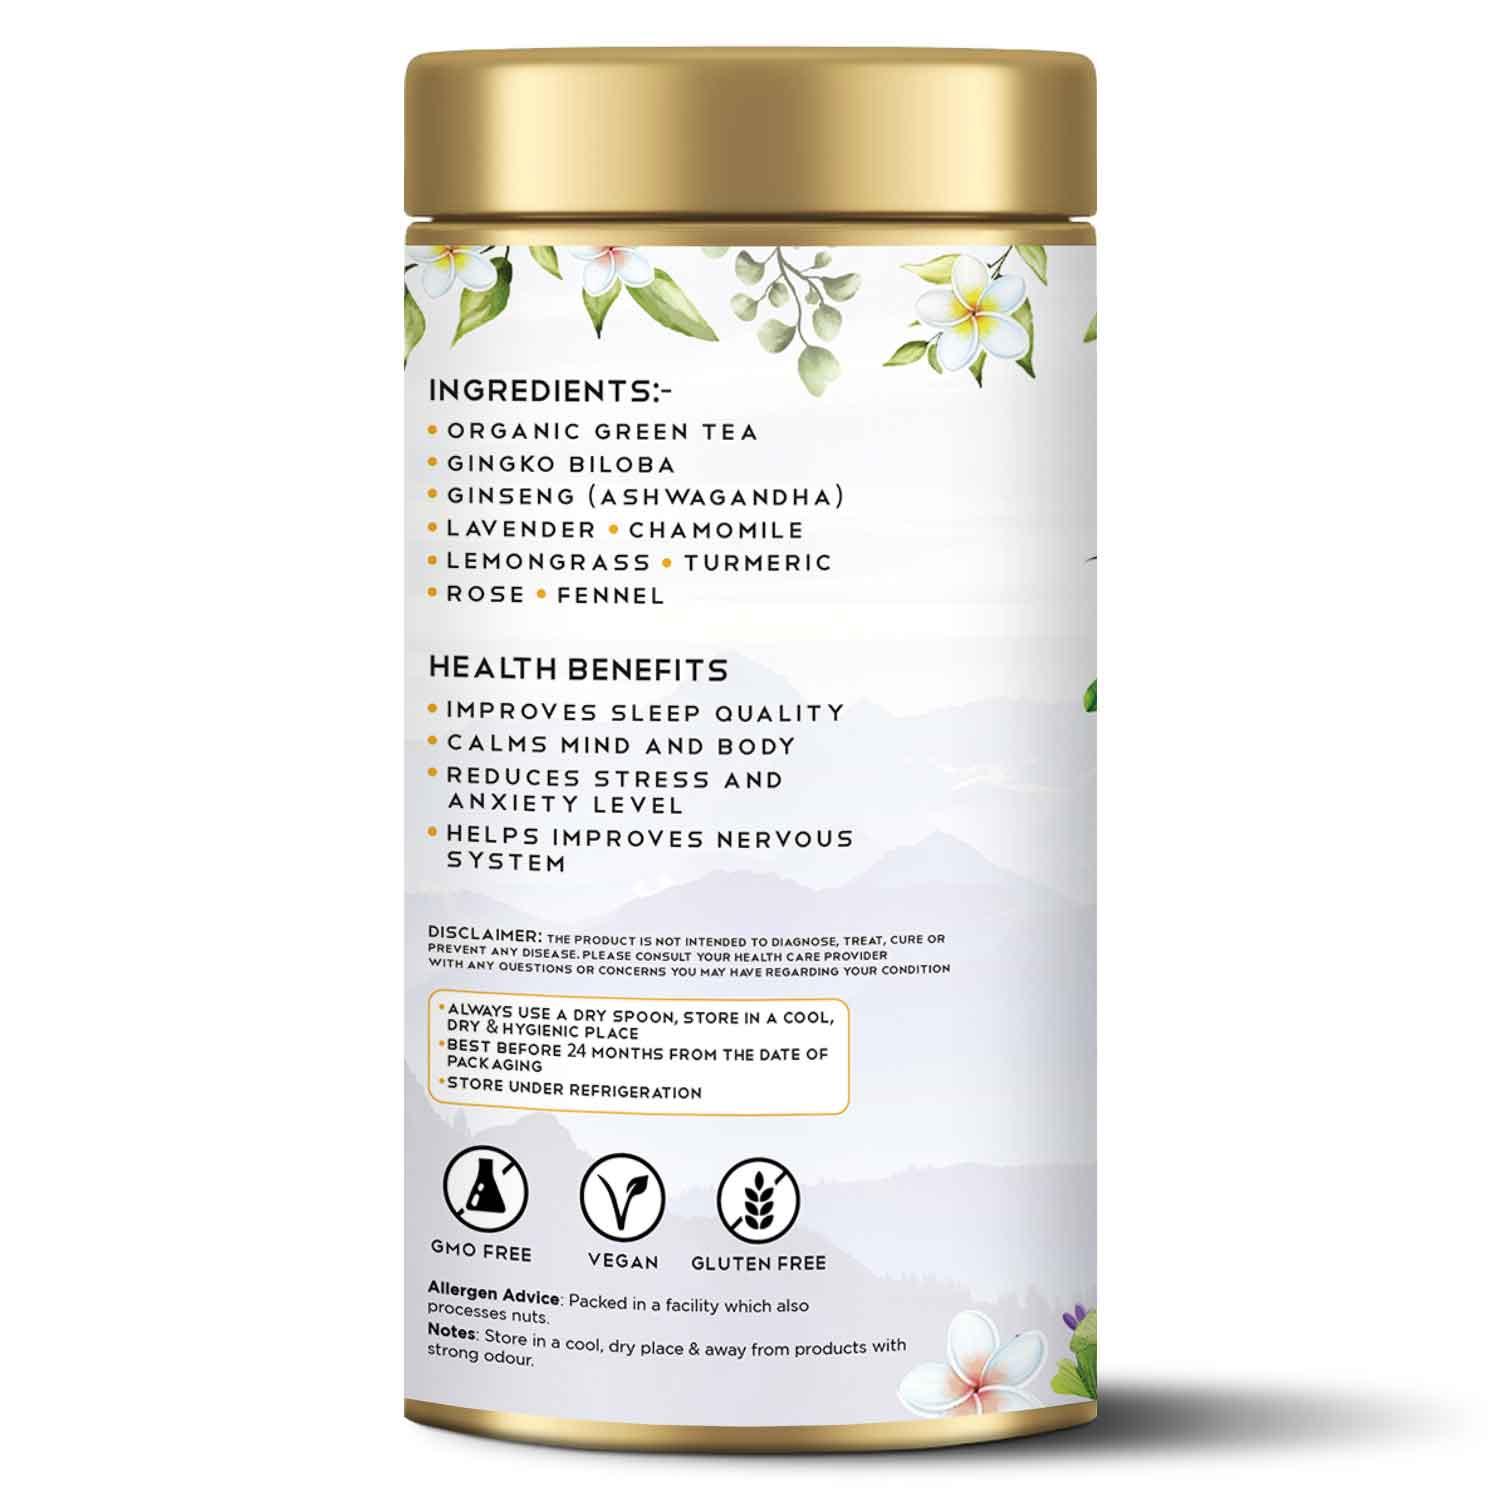 Ayurvedic Anxiety Relief Herbal Tea - Tearaja